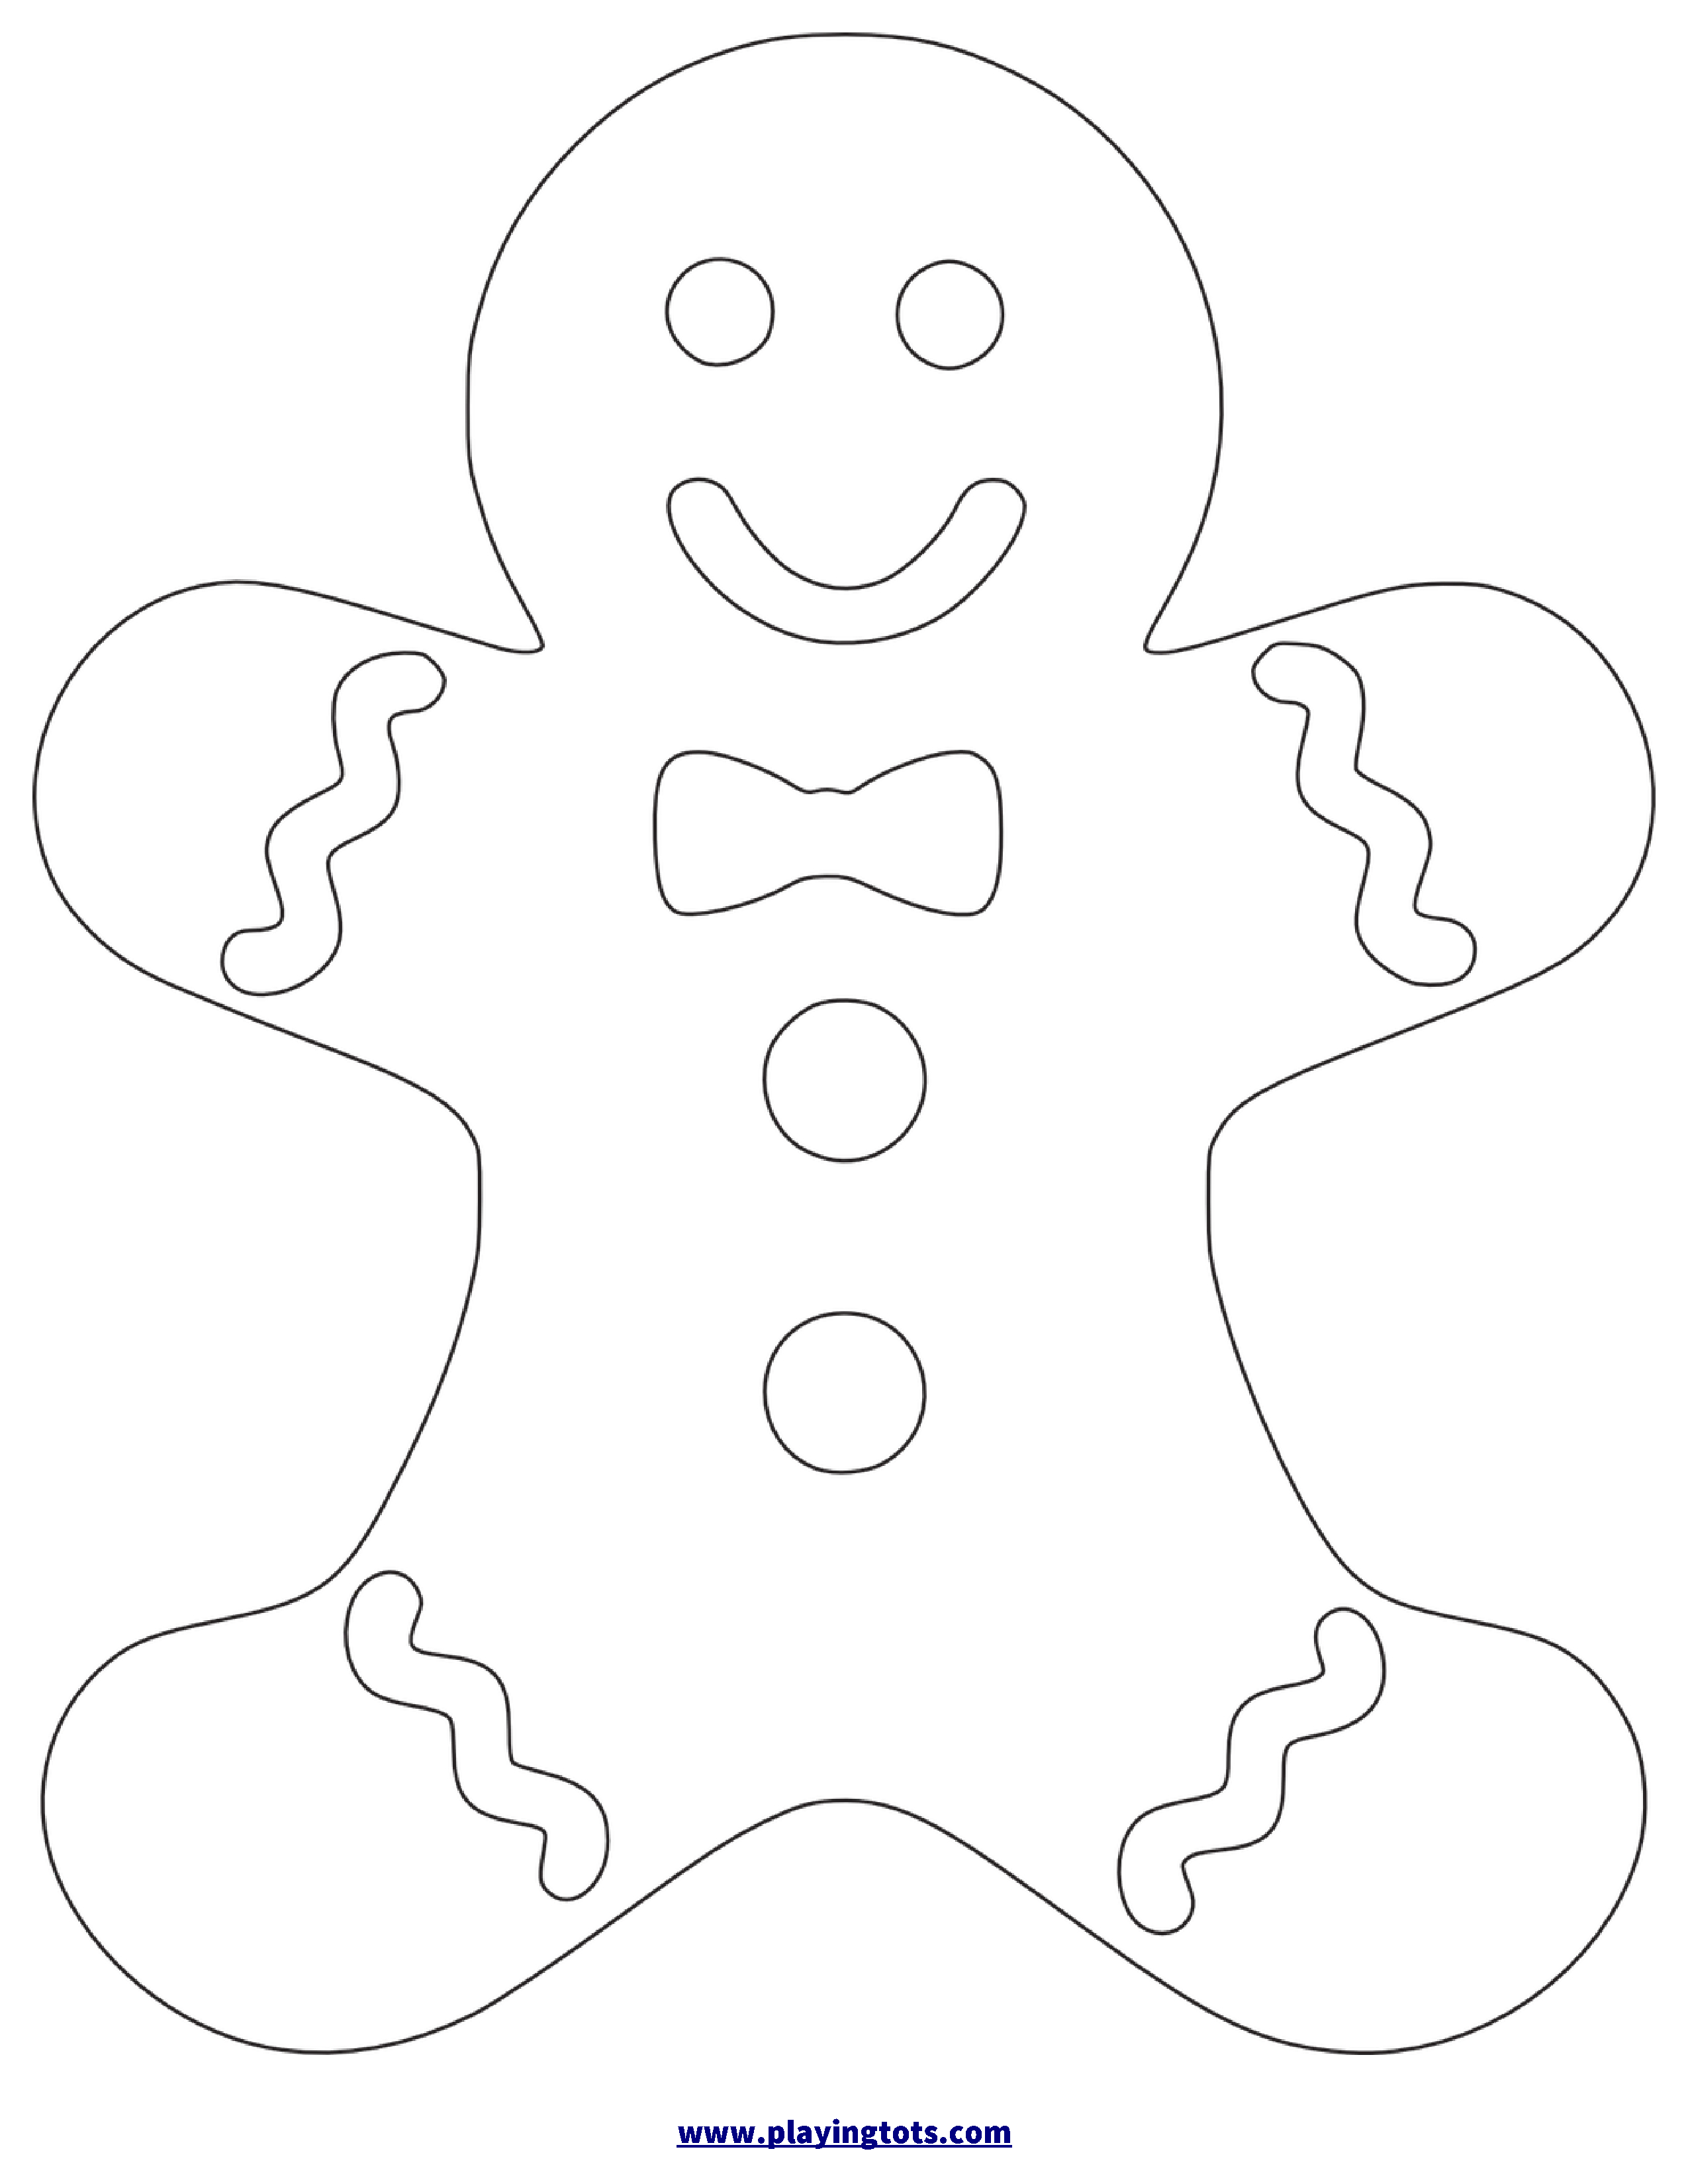 Free Printable Gingerbread Man Worksheet | Christmas Crafts - Free Printable Gingerbread Man Activities